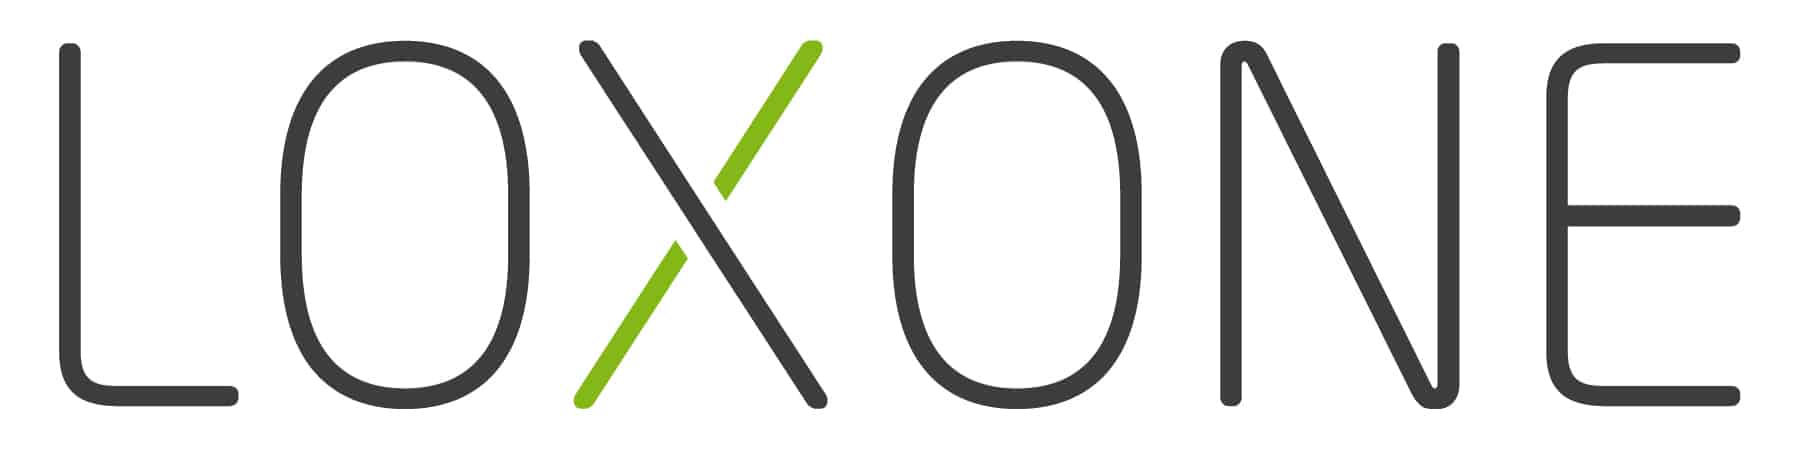 Loxone_Logo